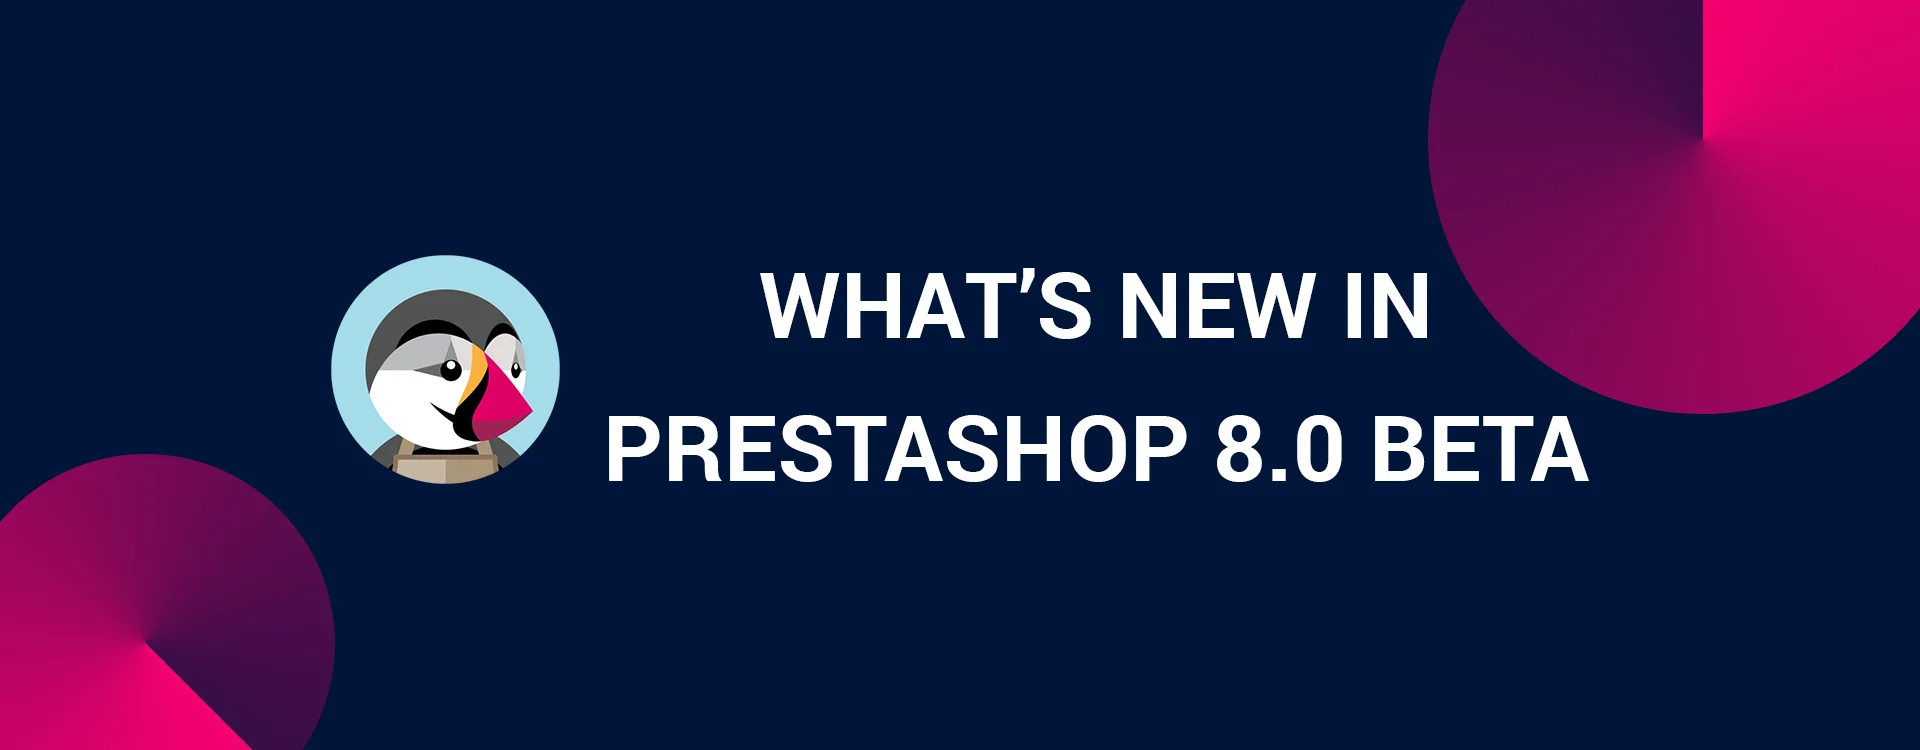 What's new in PrestaShop 8.0 beta?